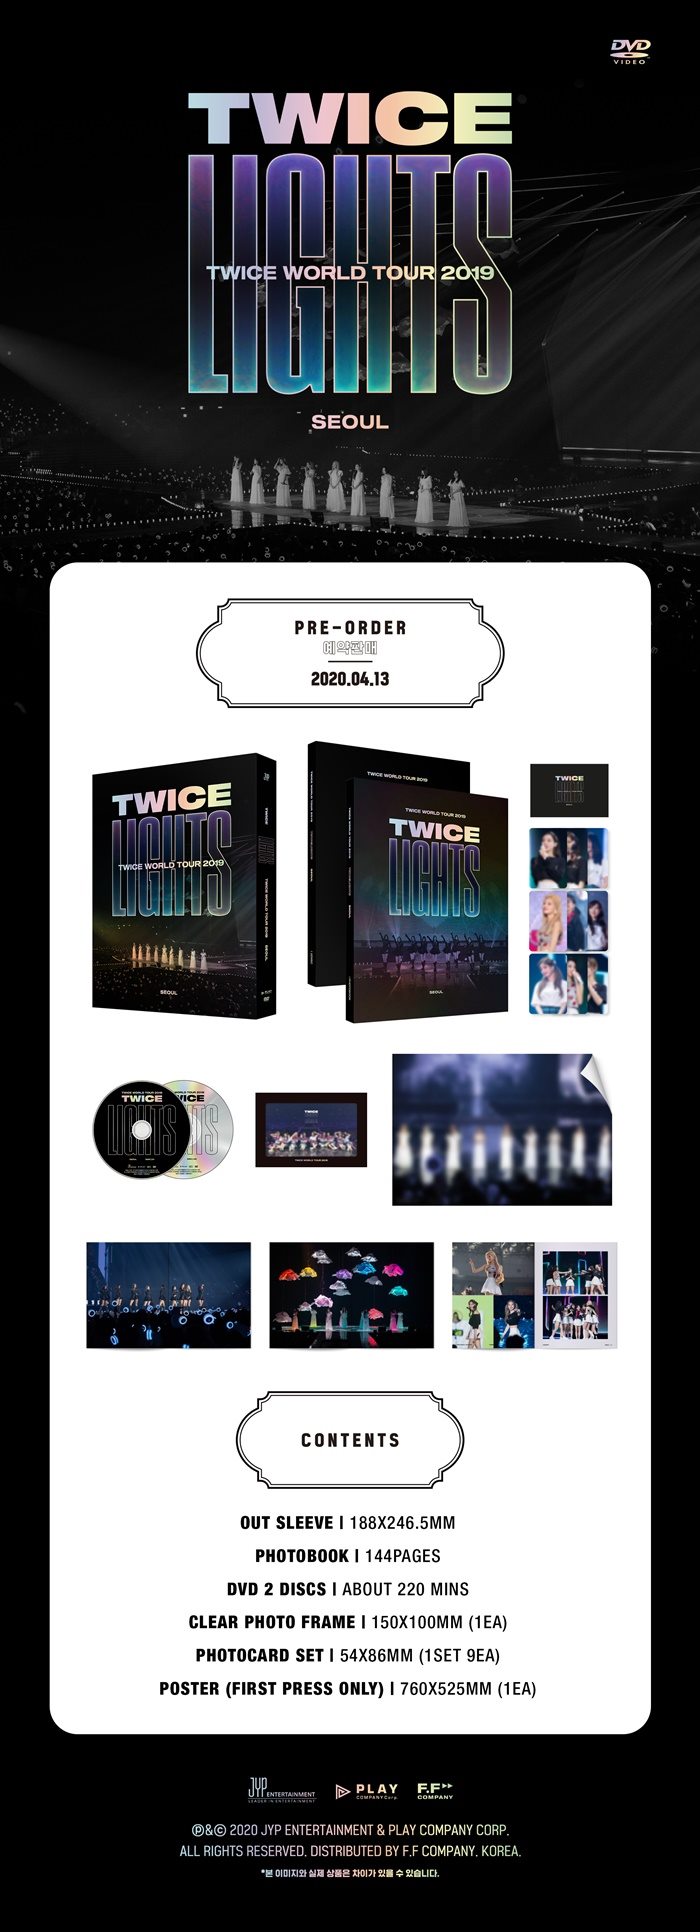 TWICE WORLD TOUR 2019 LIGHTS DVD トレカ